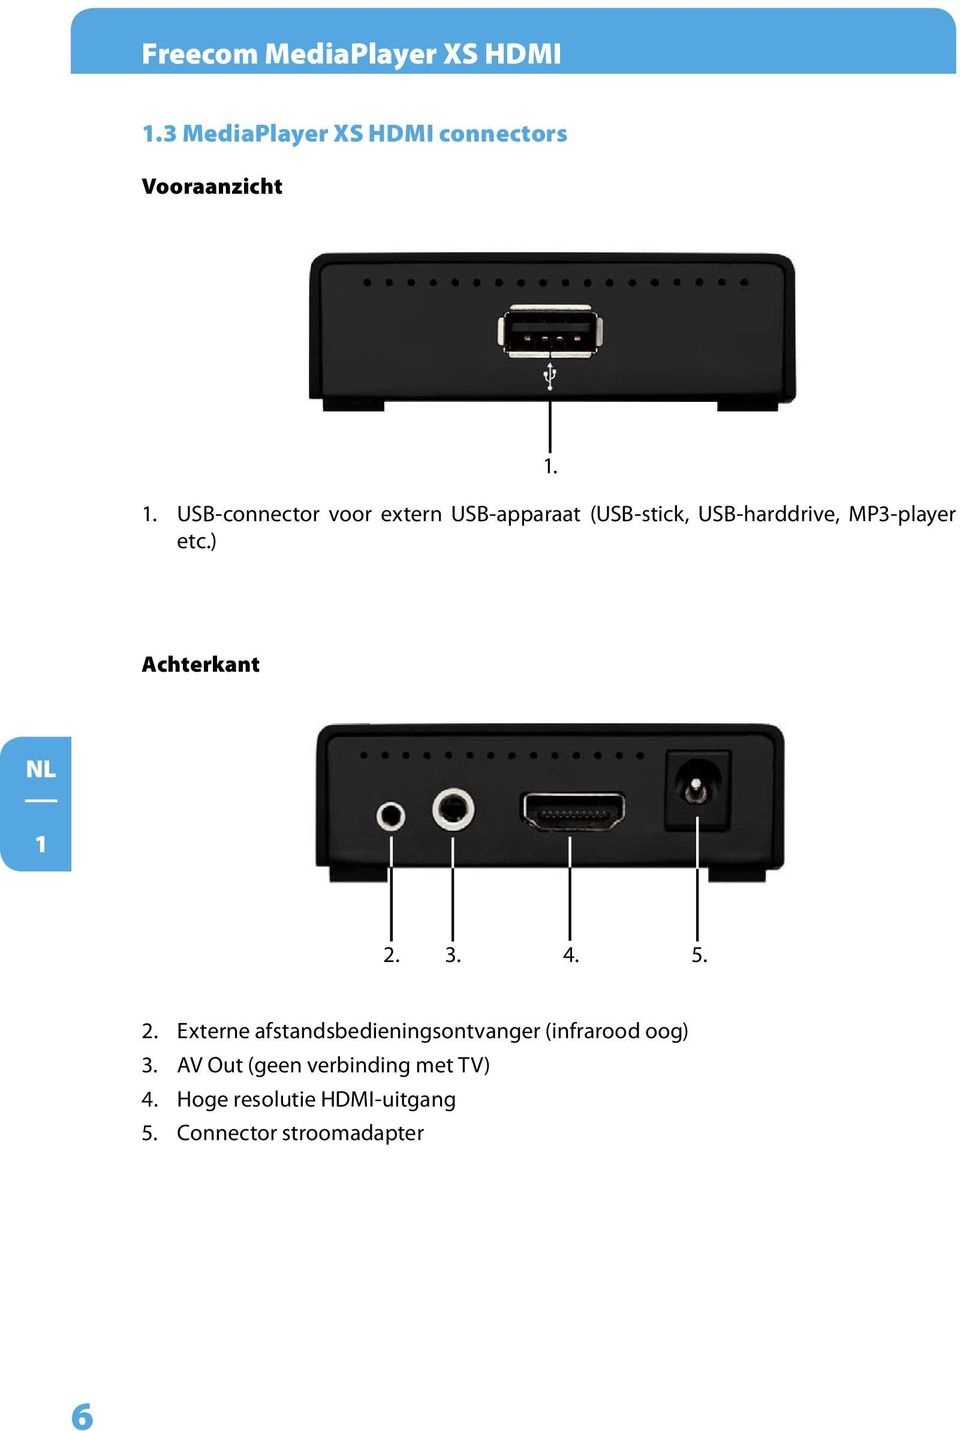 1. USB-connector voor extern USB-apparaat (USB-stick, USB-harddrive, MP3-player etc.